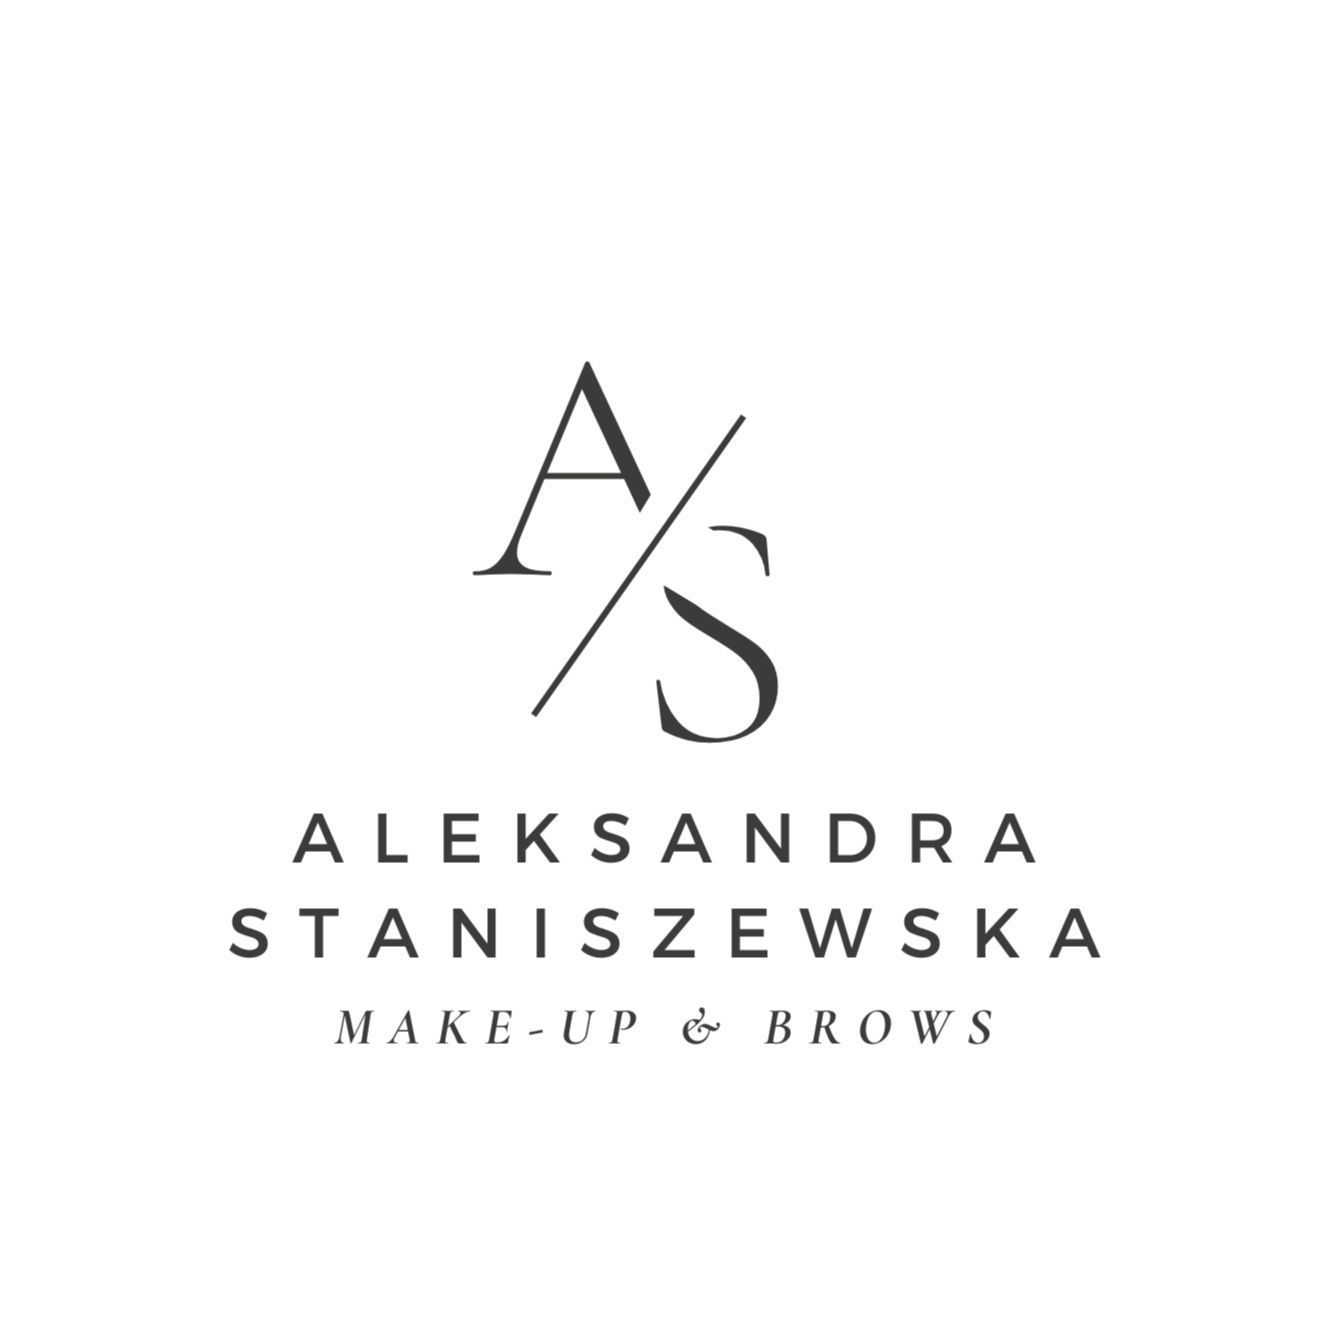 Aleksandra Staniszewska Makeup&Brows, Szkolna 16 lok. 9, nad Balkan Barber, 05-500, Piaseczno